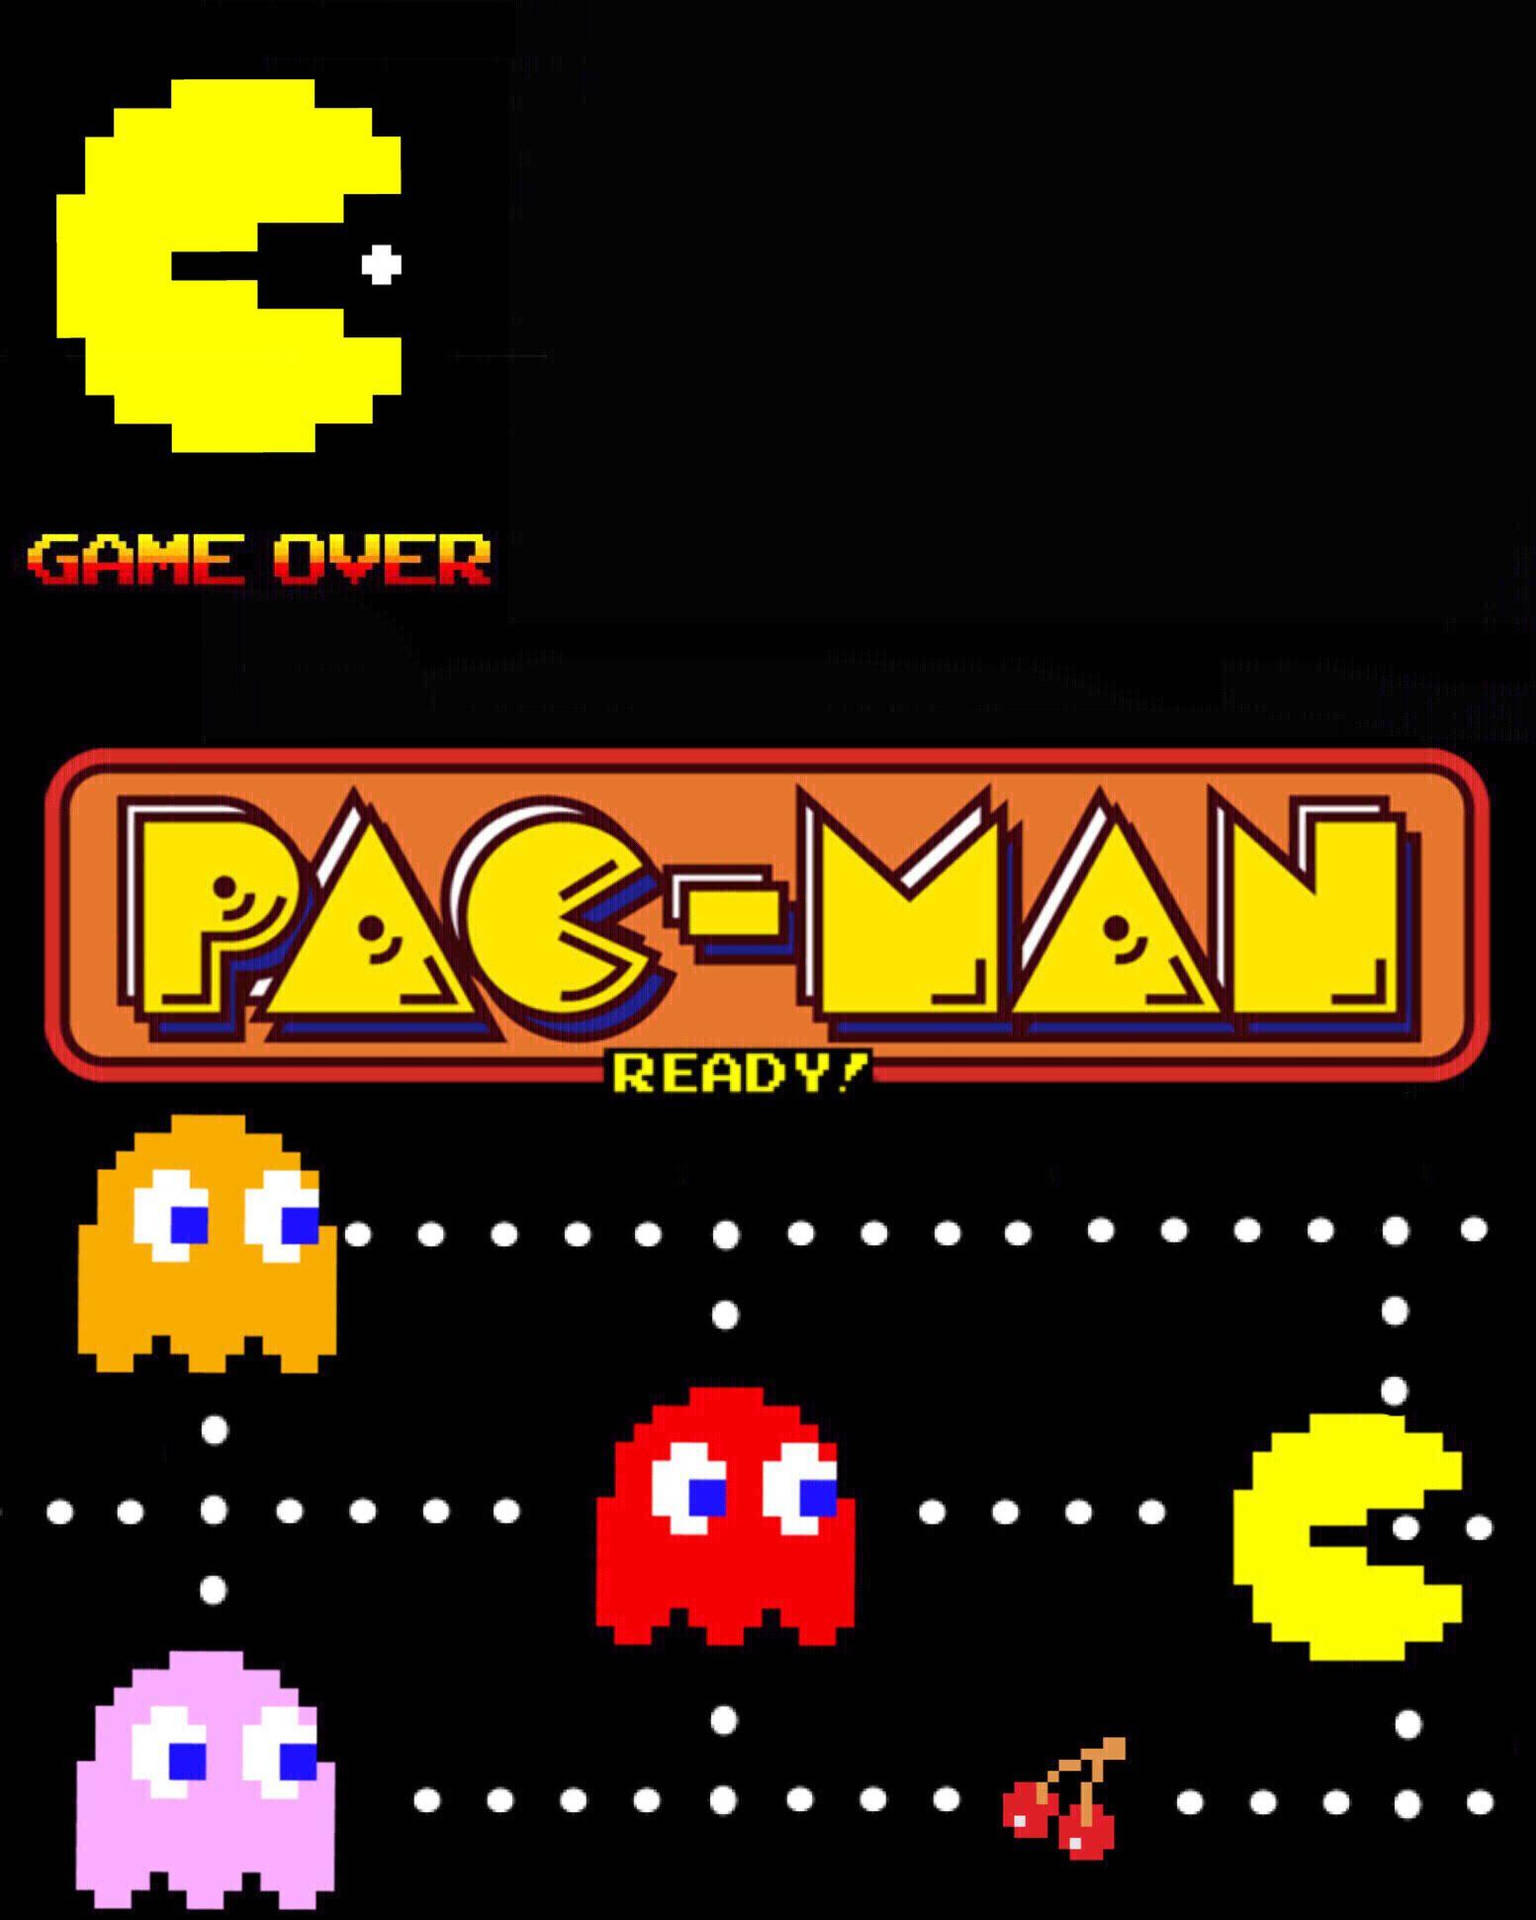 Pac Mand 1553 X 1941 Wallpaper